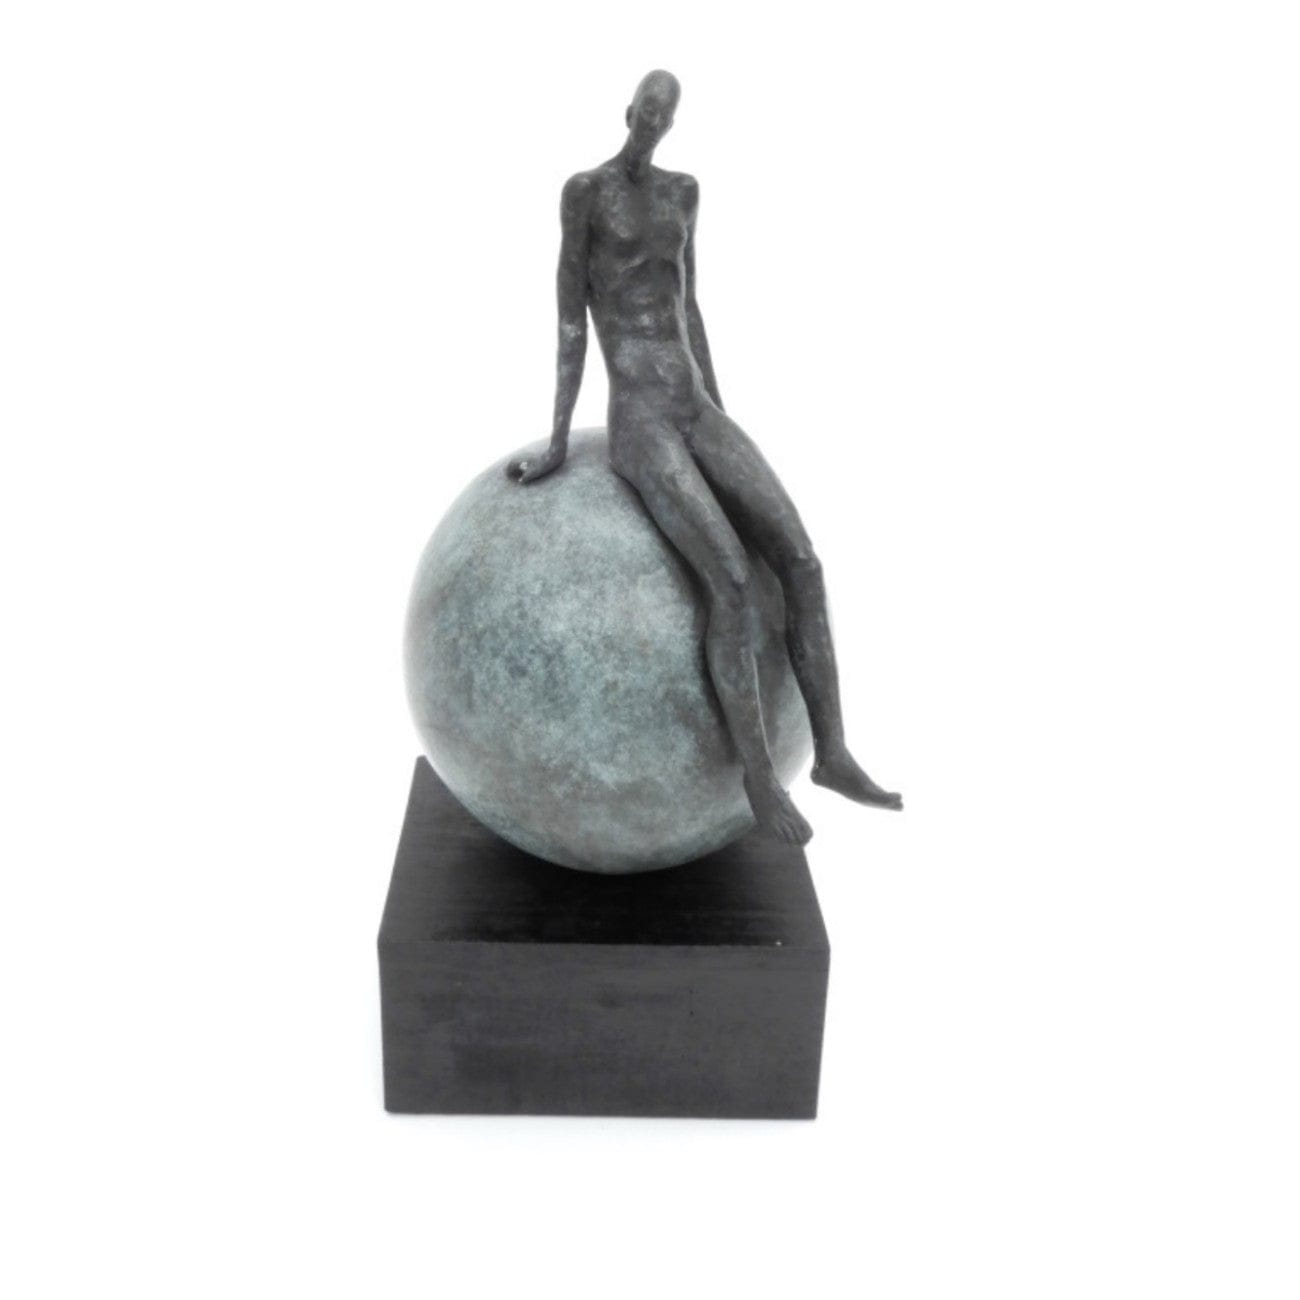 Eccotrading Design London Accessories Bronze Figure On Globe 2 House of Isabella UK